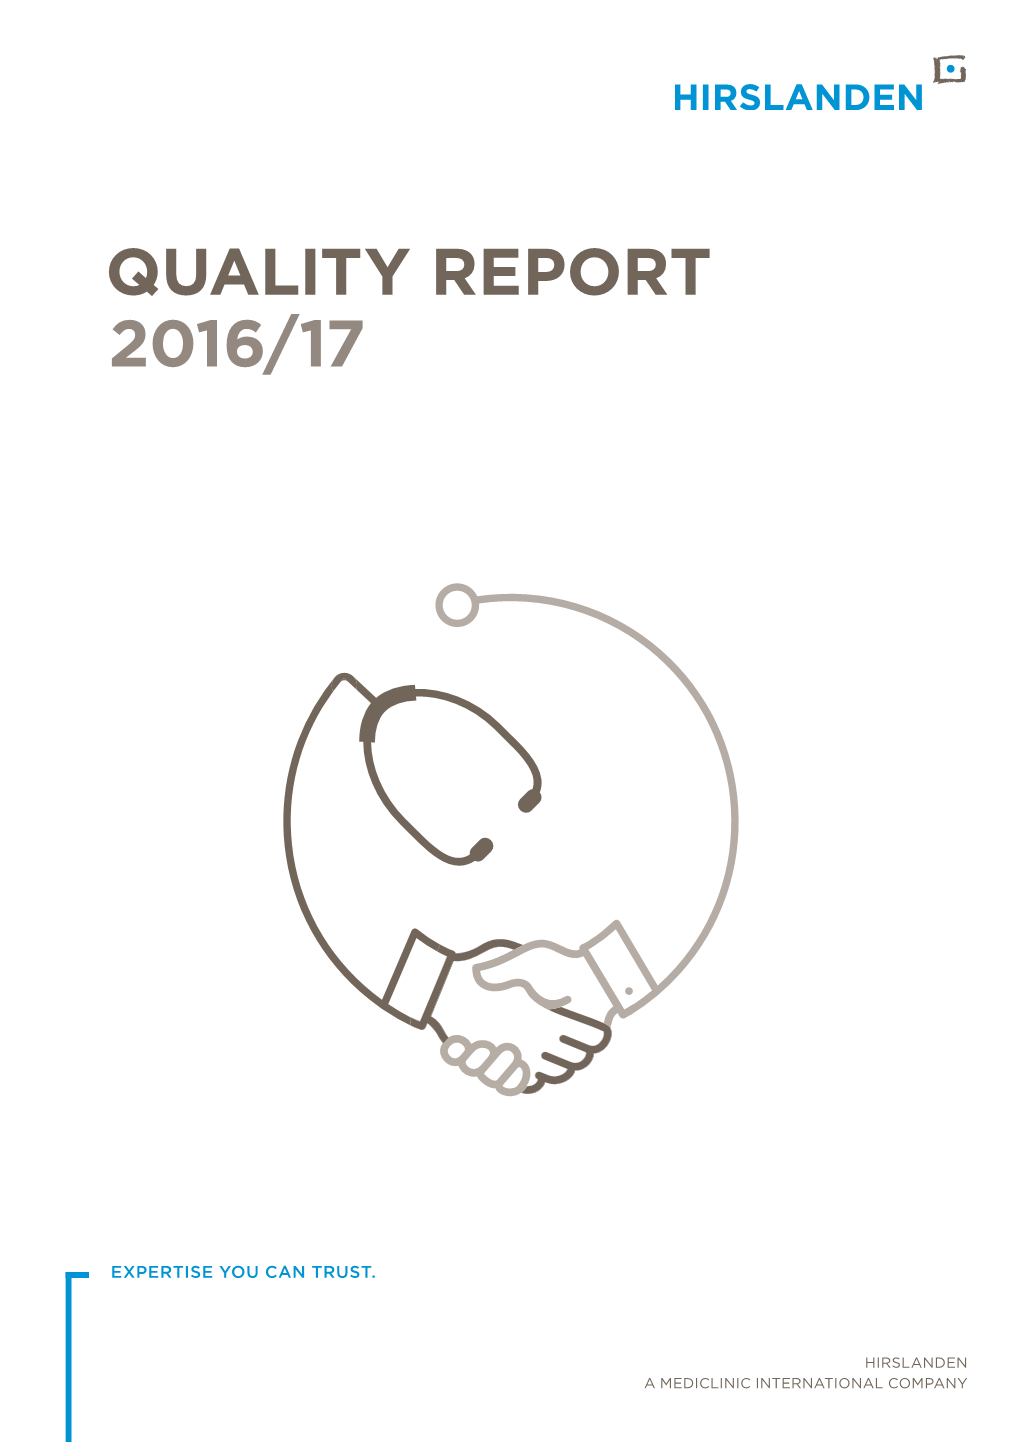 Hirslanden Quality Report 16/17